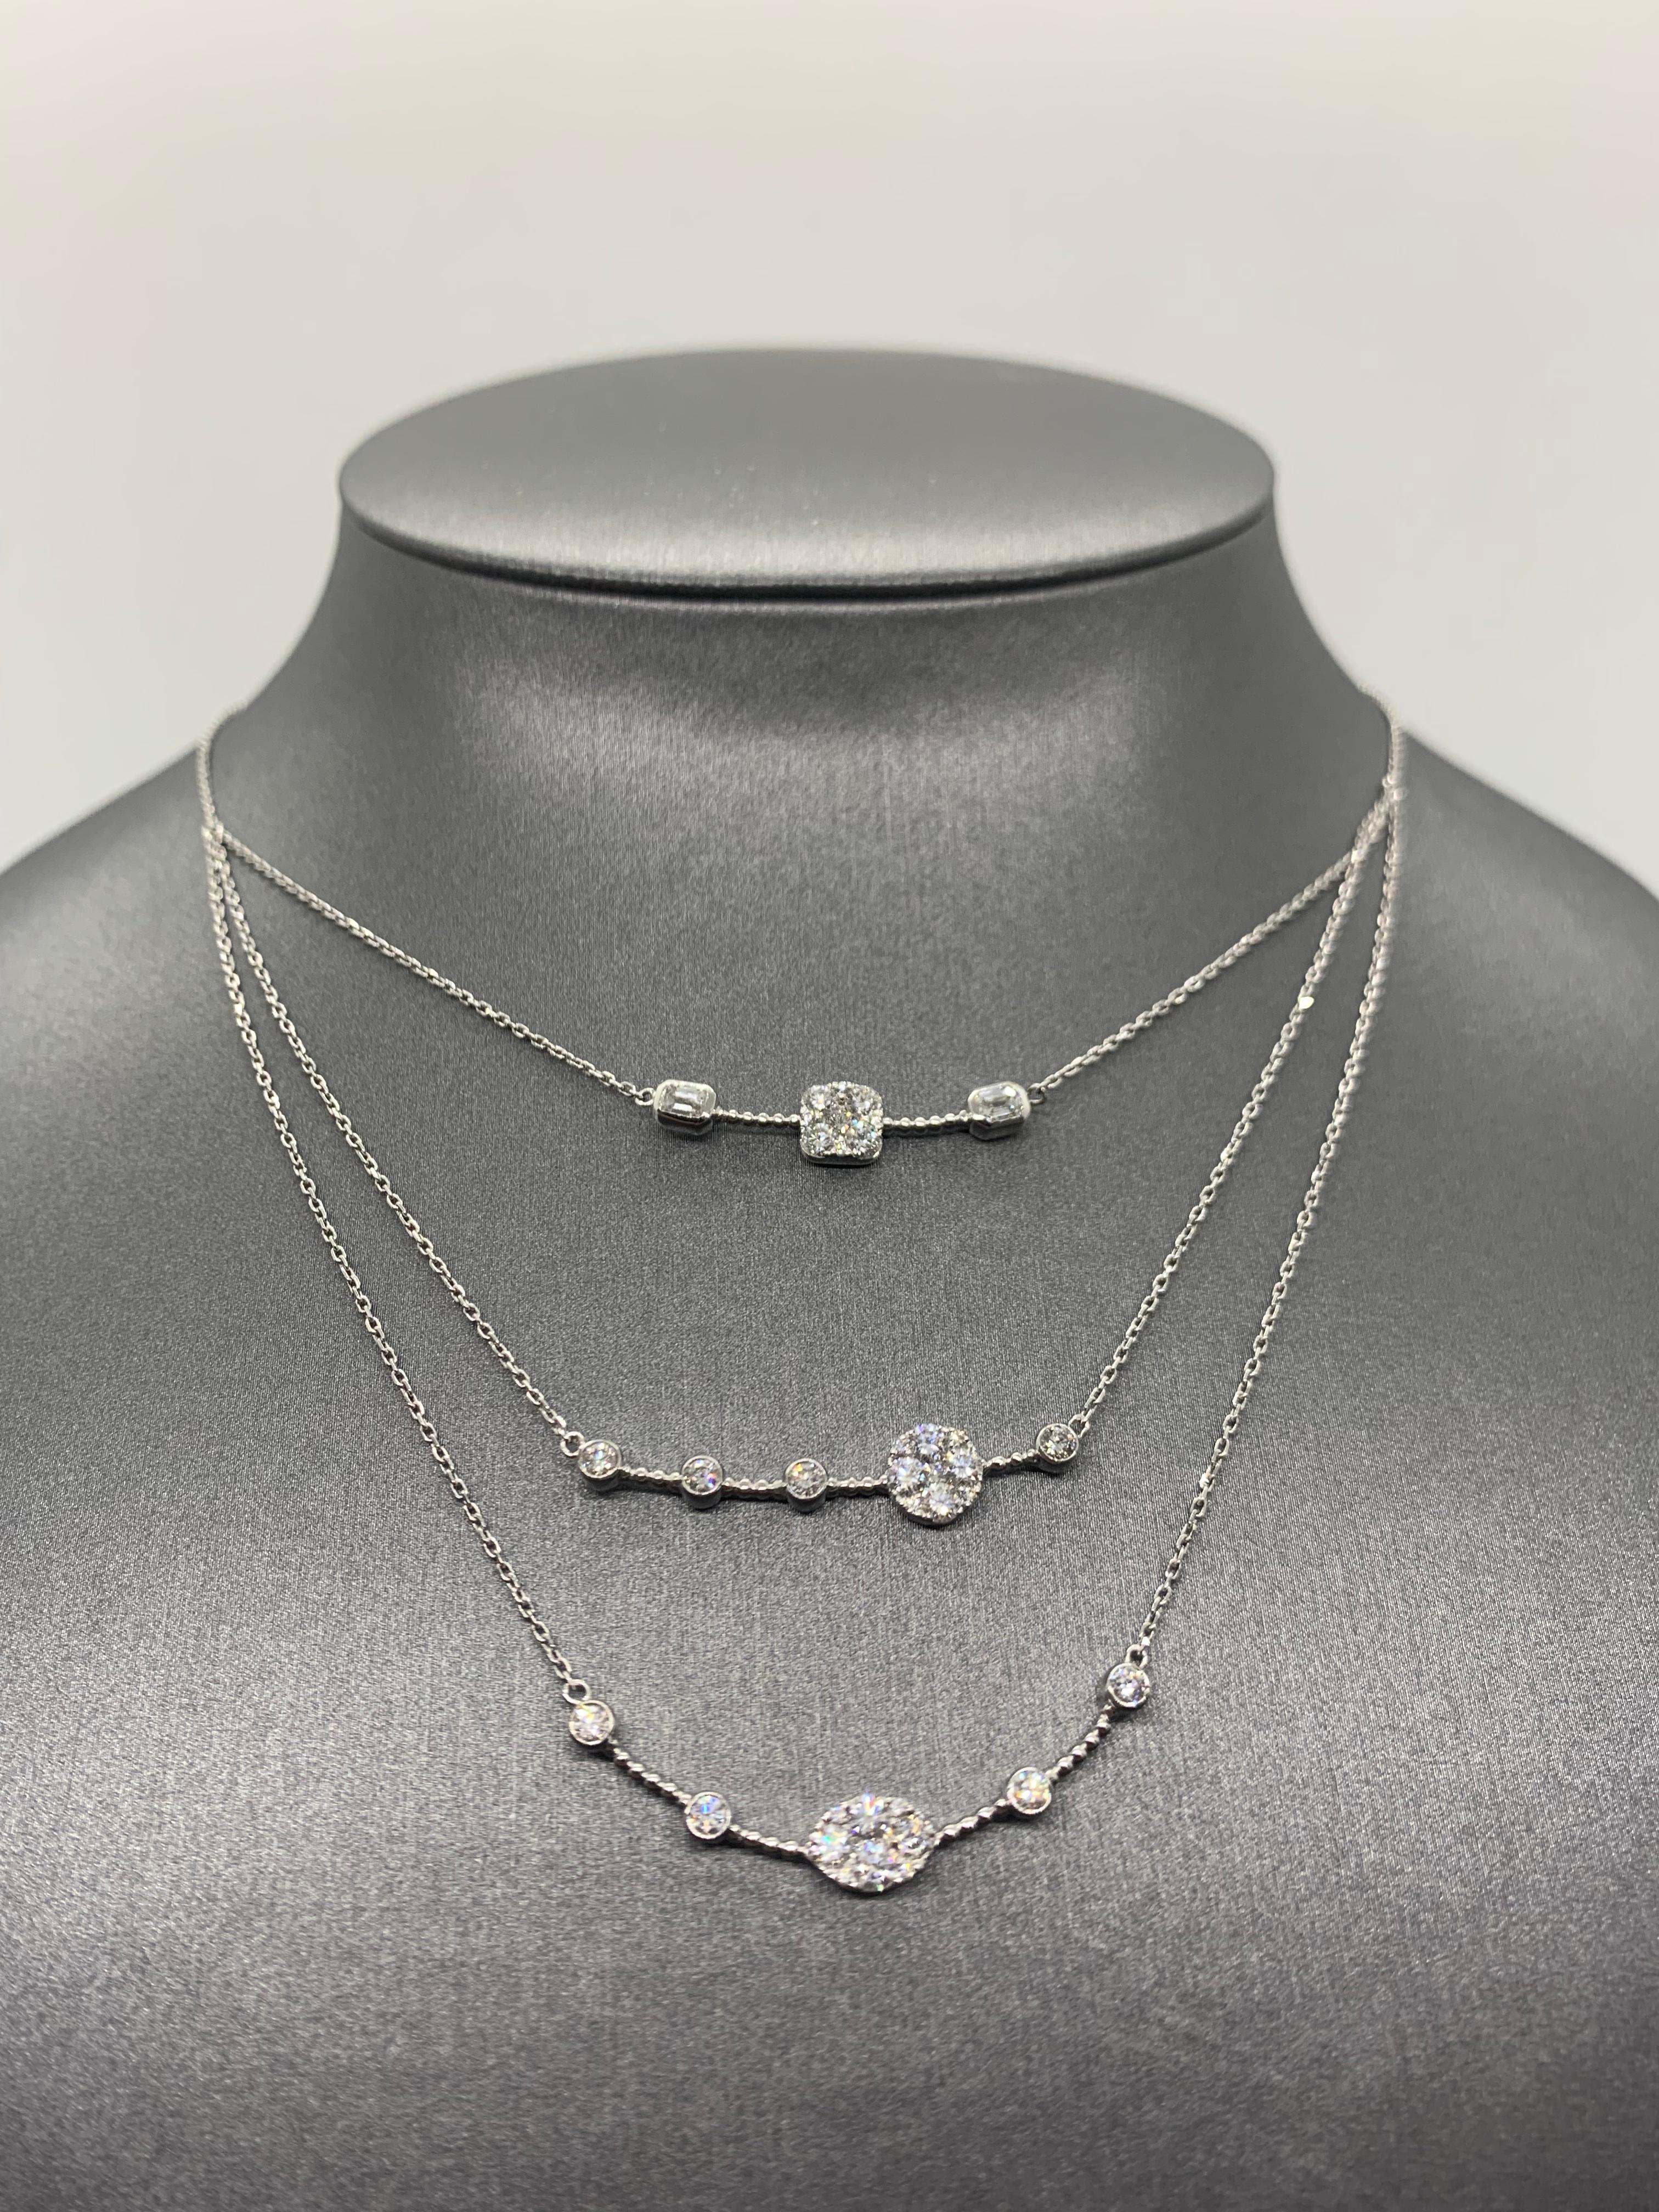 3 layer diamond necklace